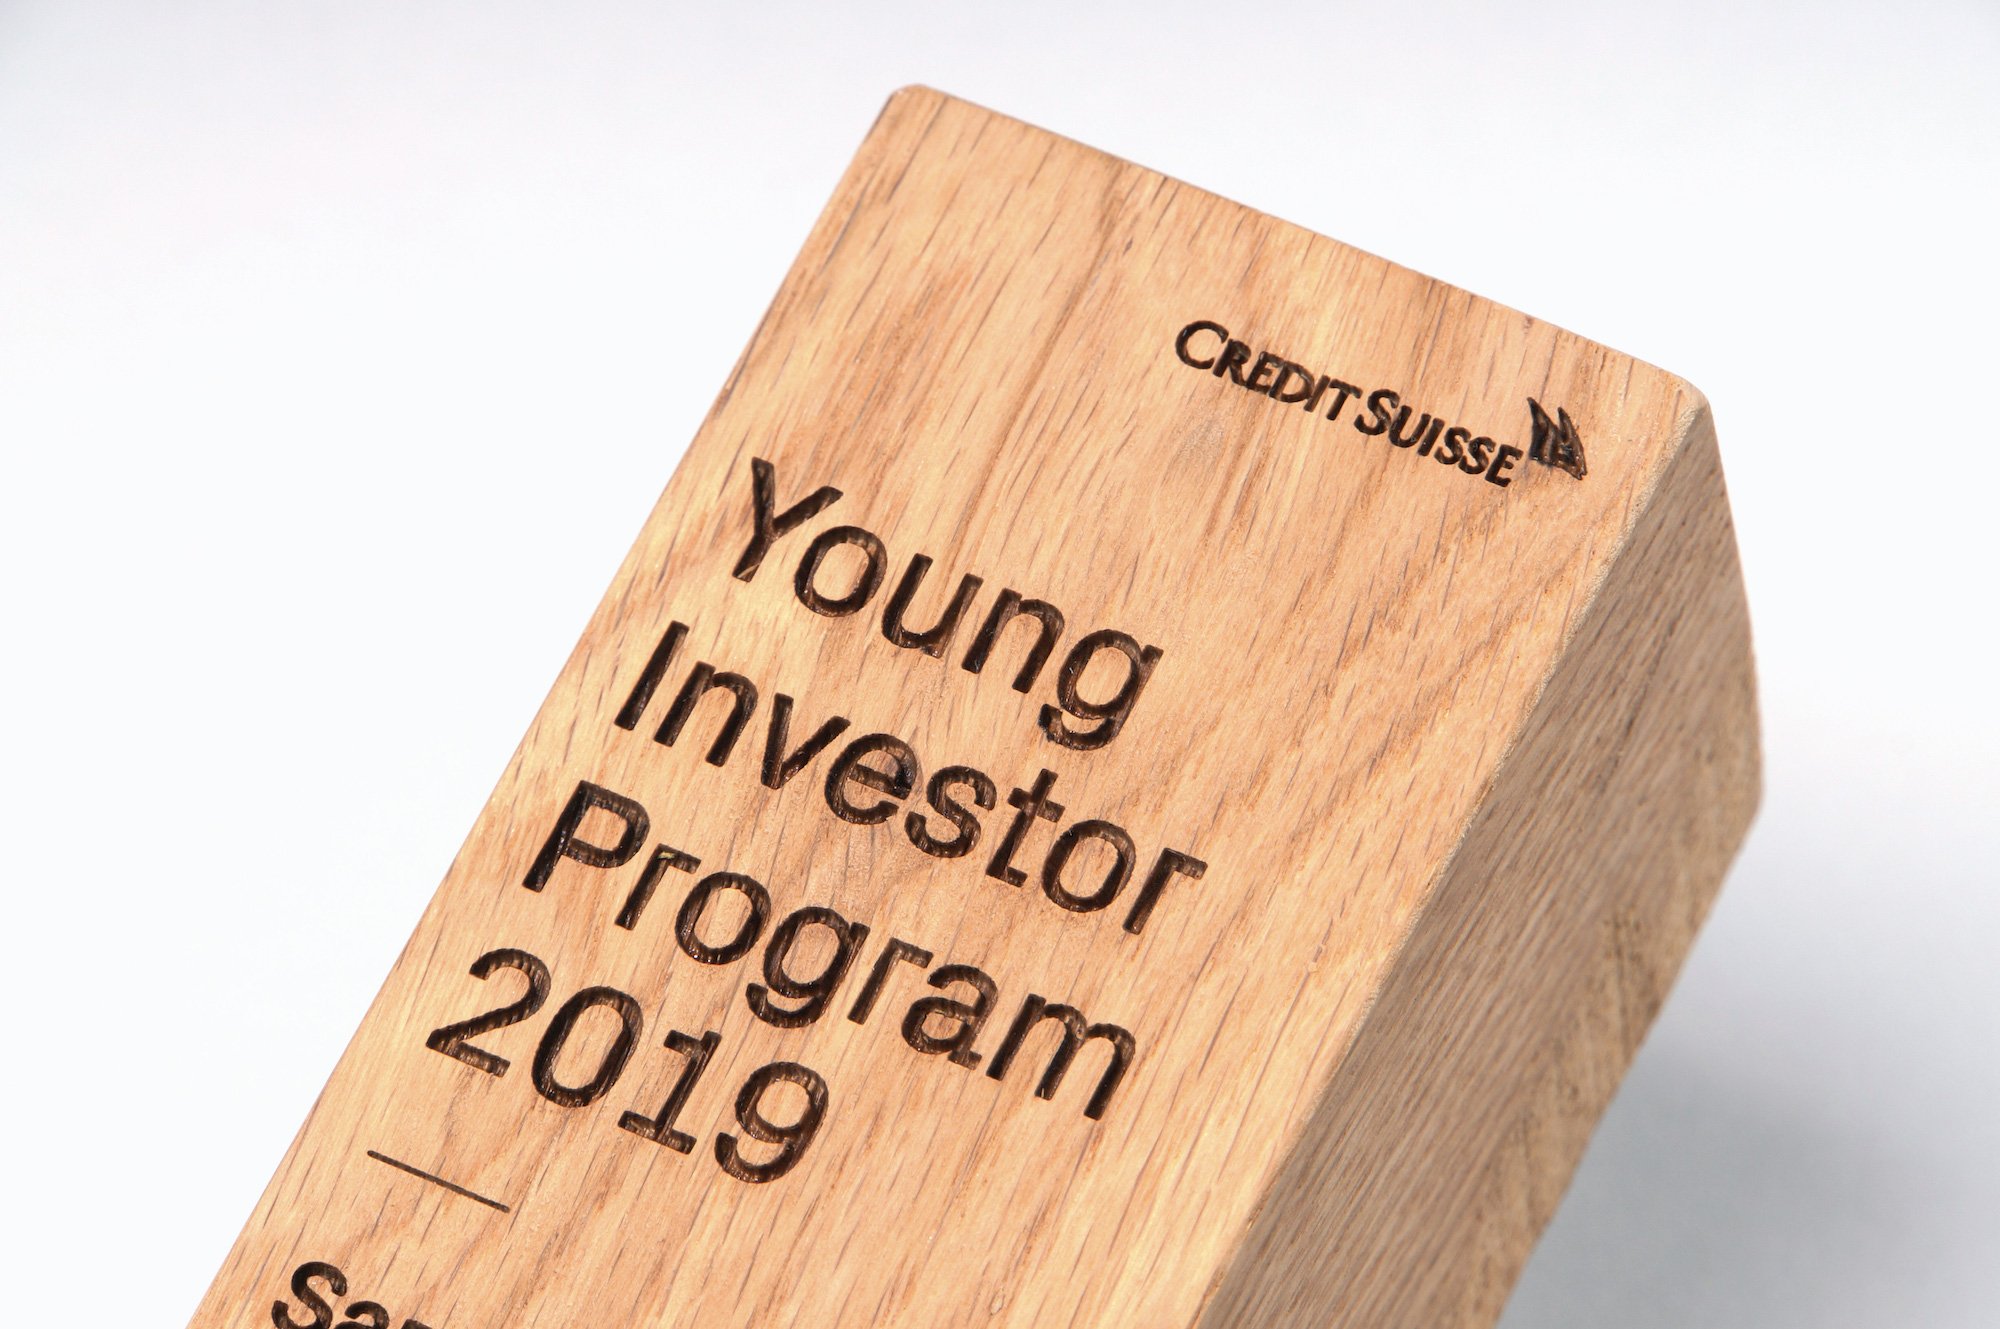 Credit Suisse Young Investor Program 2019